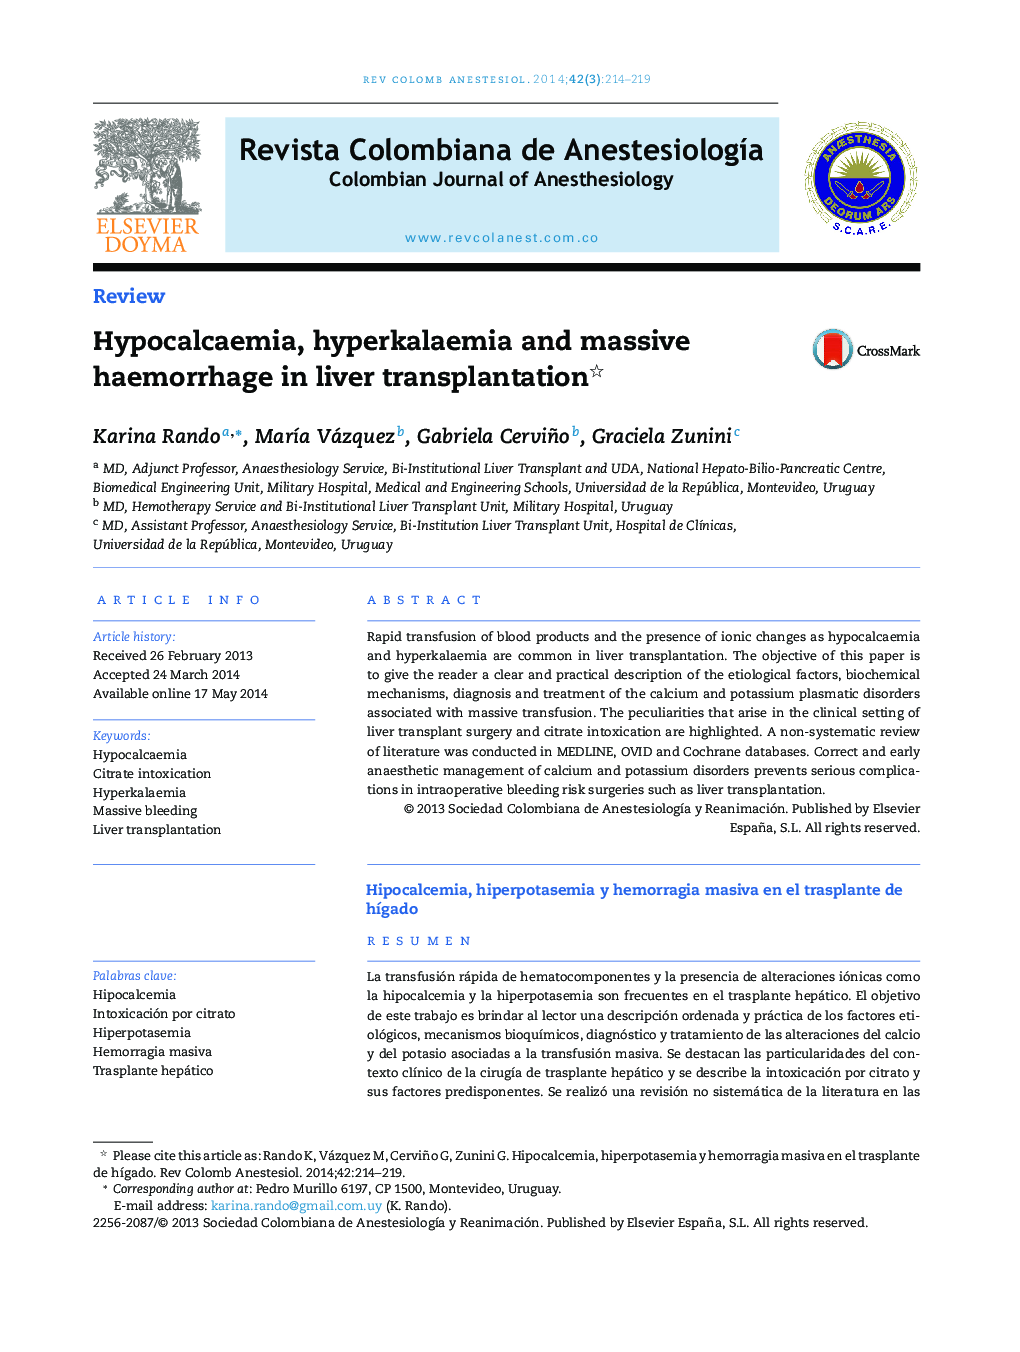 Hypocalcaemia, hyperkalaemia and massive haemorrhage in liver transplantation